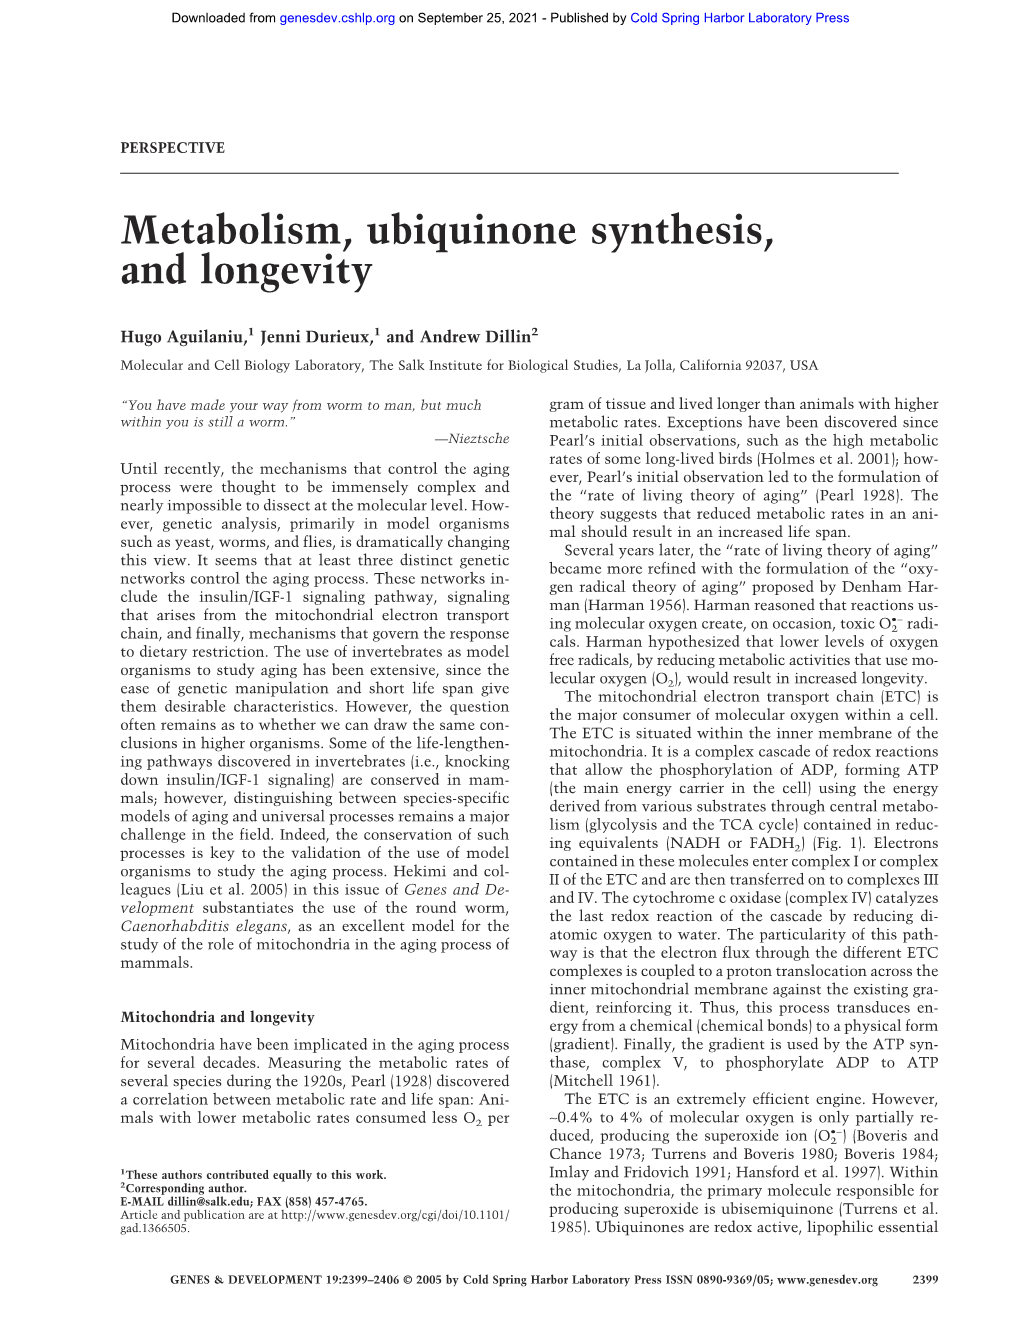 Metabolism, Ubiquinone Synthesis, and Longevity